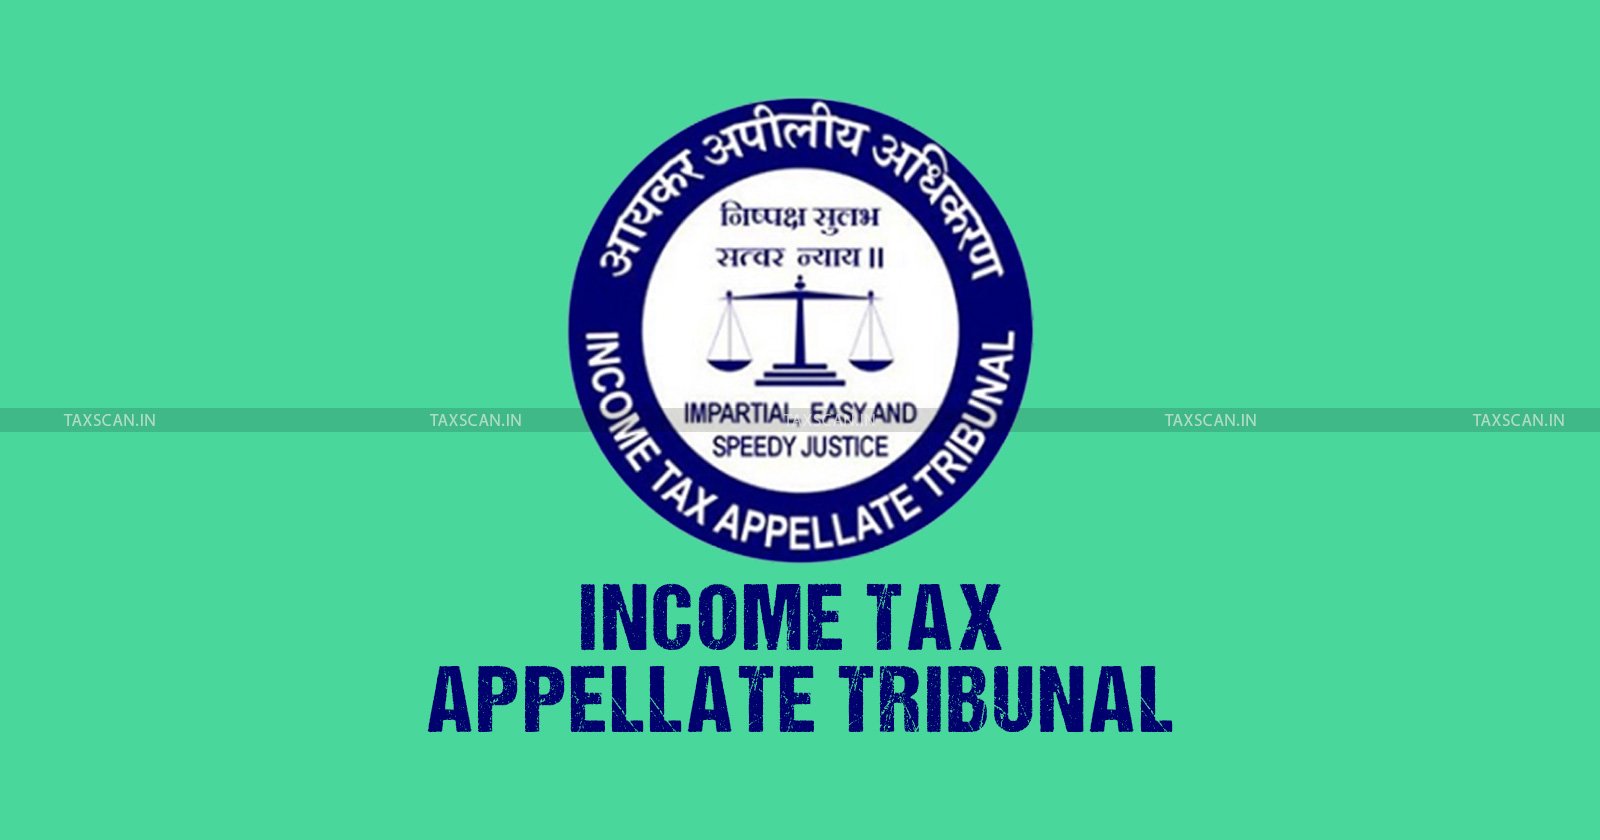 ITAT - ITAT Bangalore - Income Tax - Tax Consultant - TAXSCAN